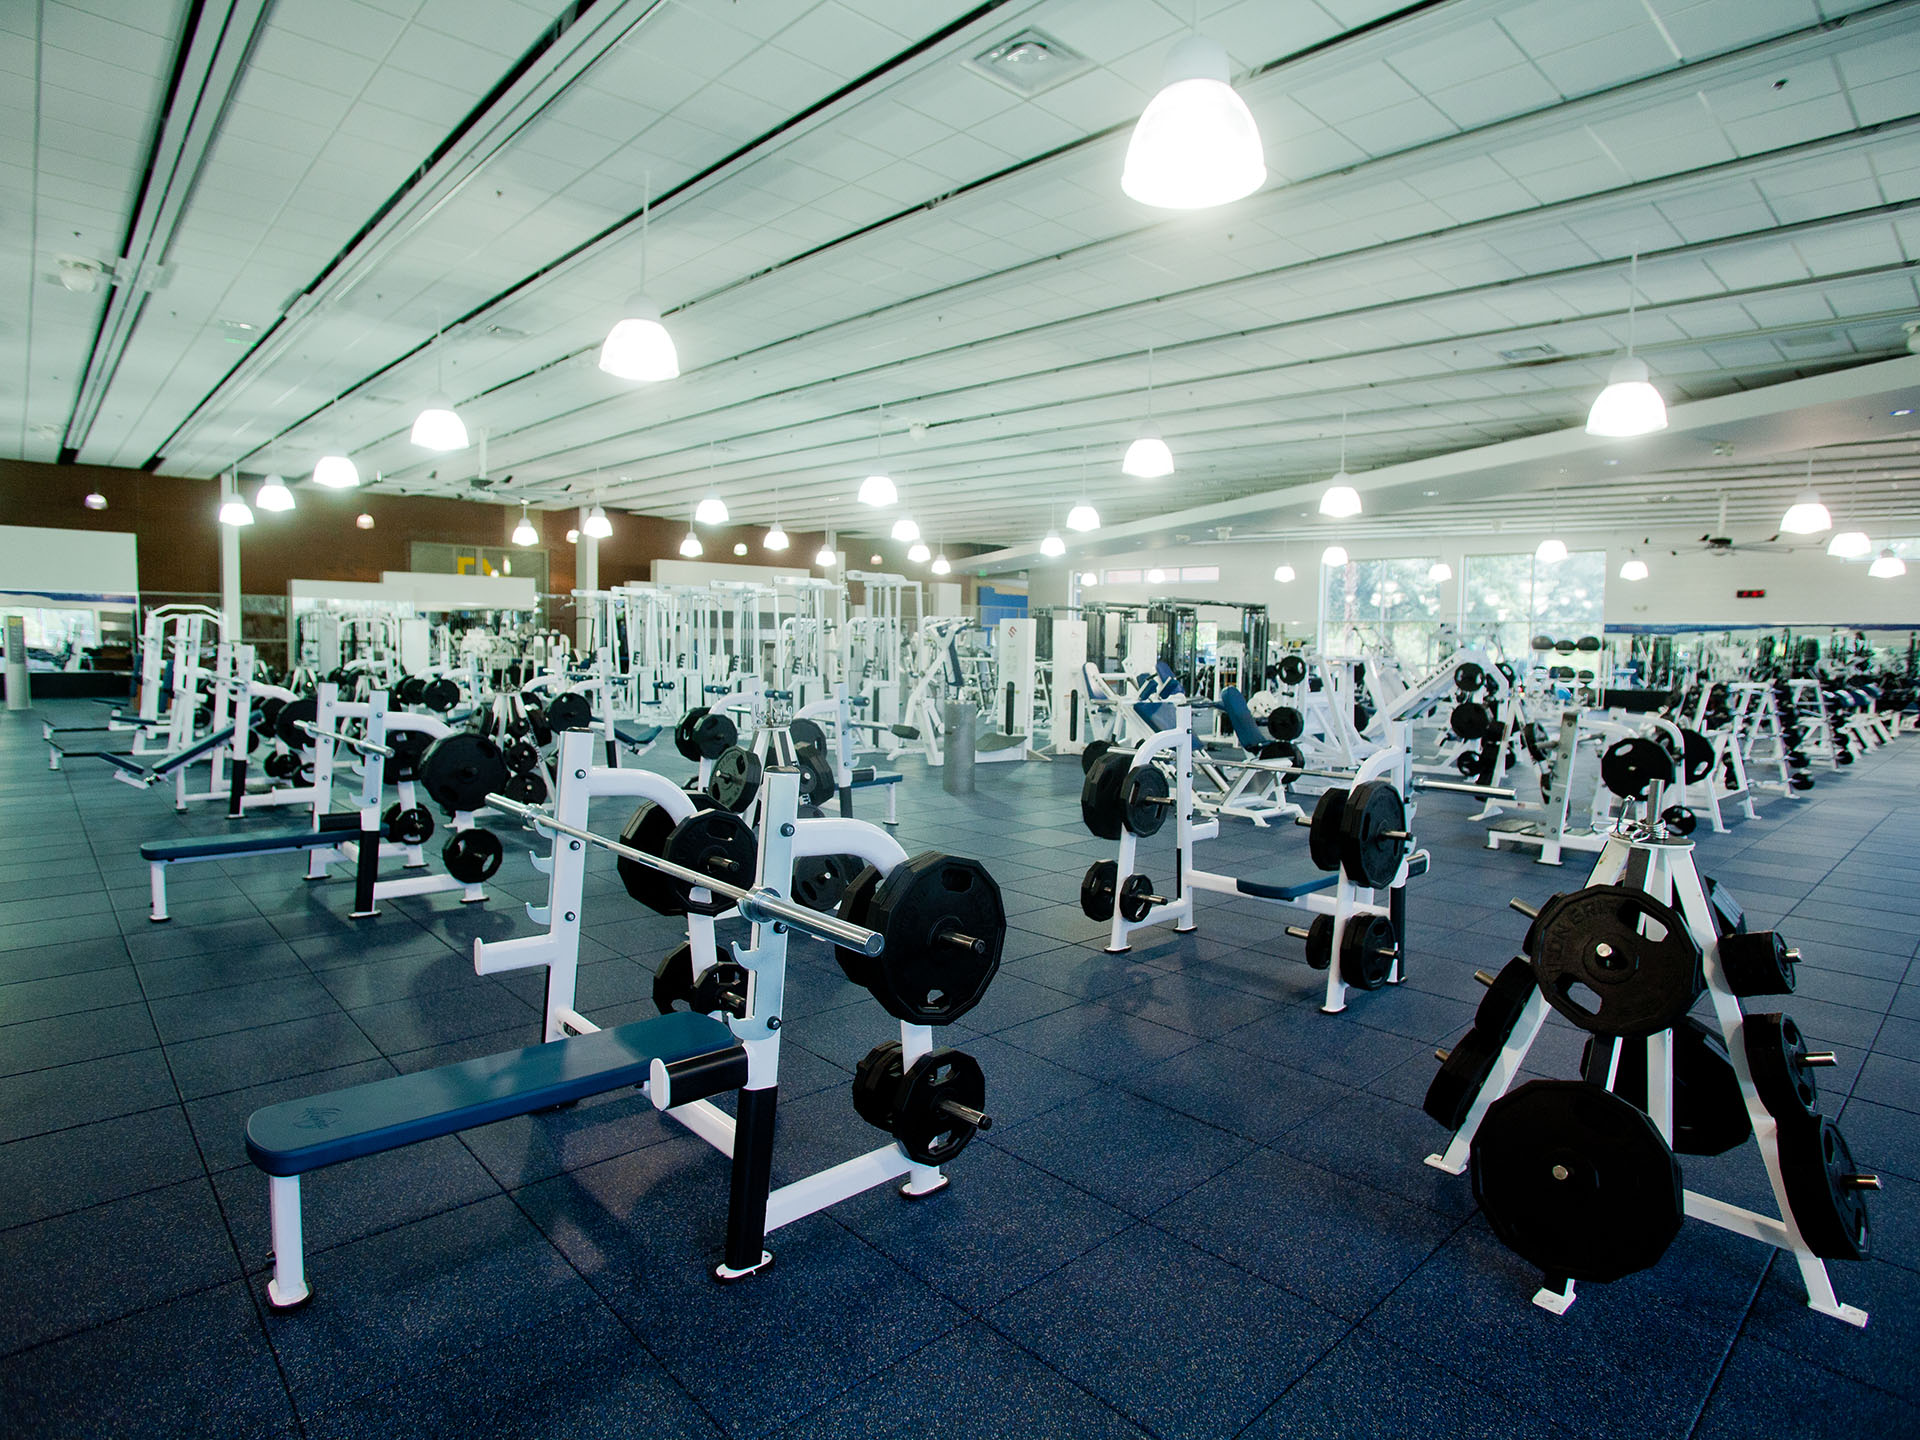 Southwest recreation center weight room